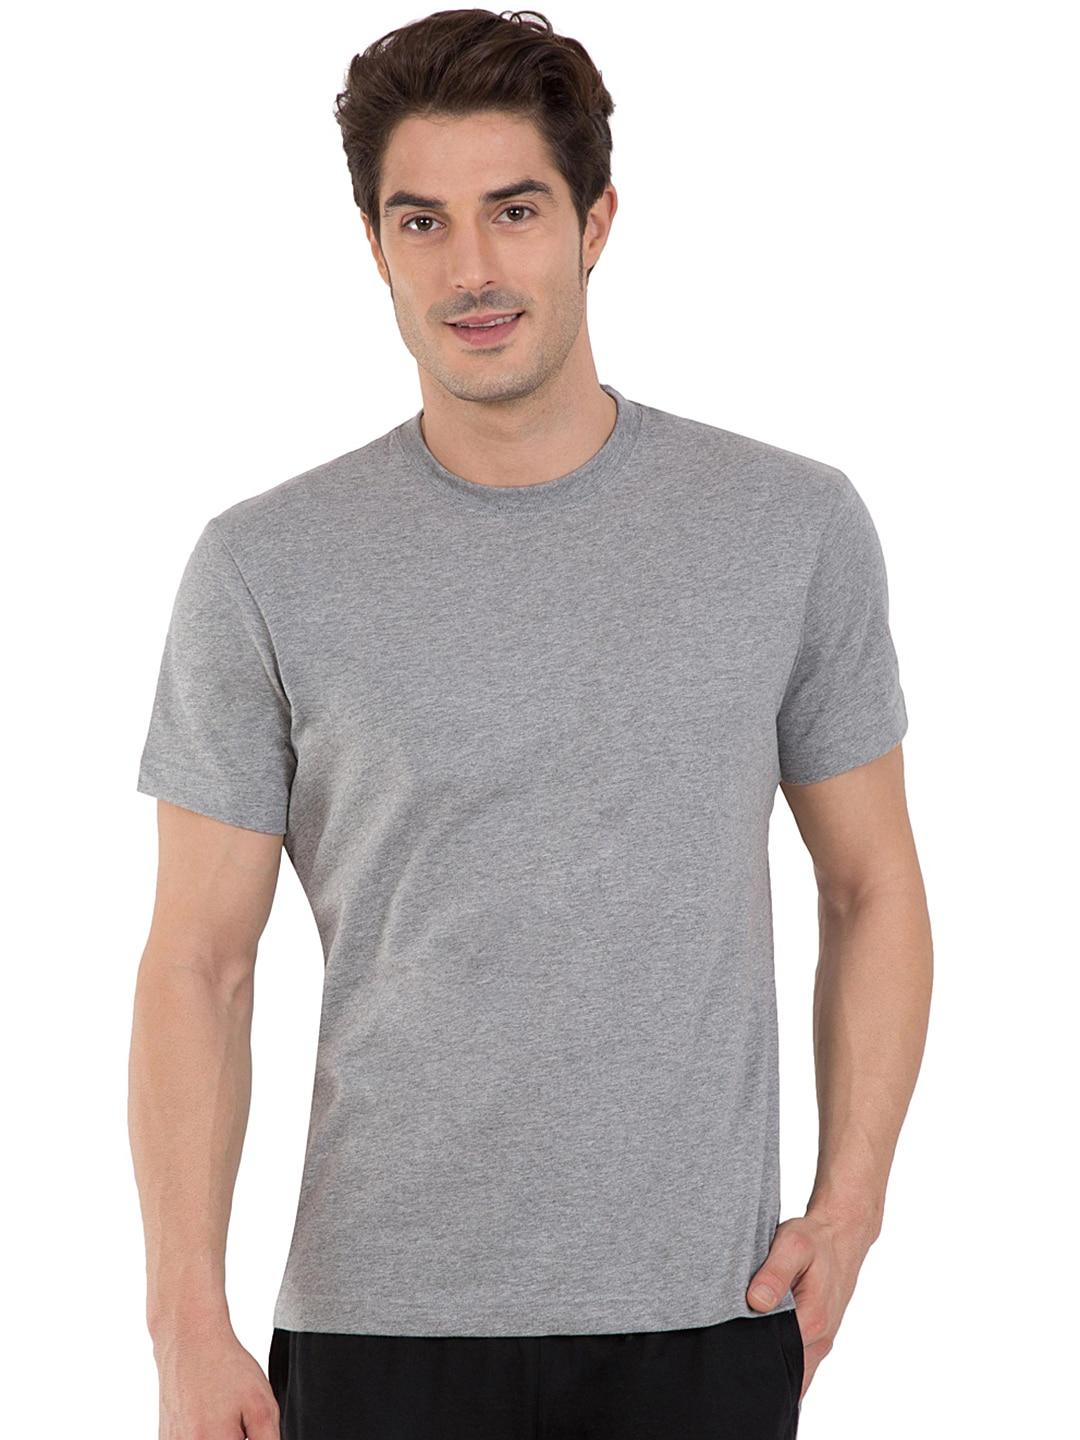 jockey-men-grey-melange-solid-comfort-fit-round-neck-sports-t-shirt